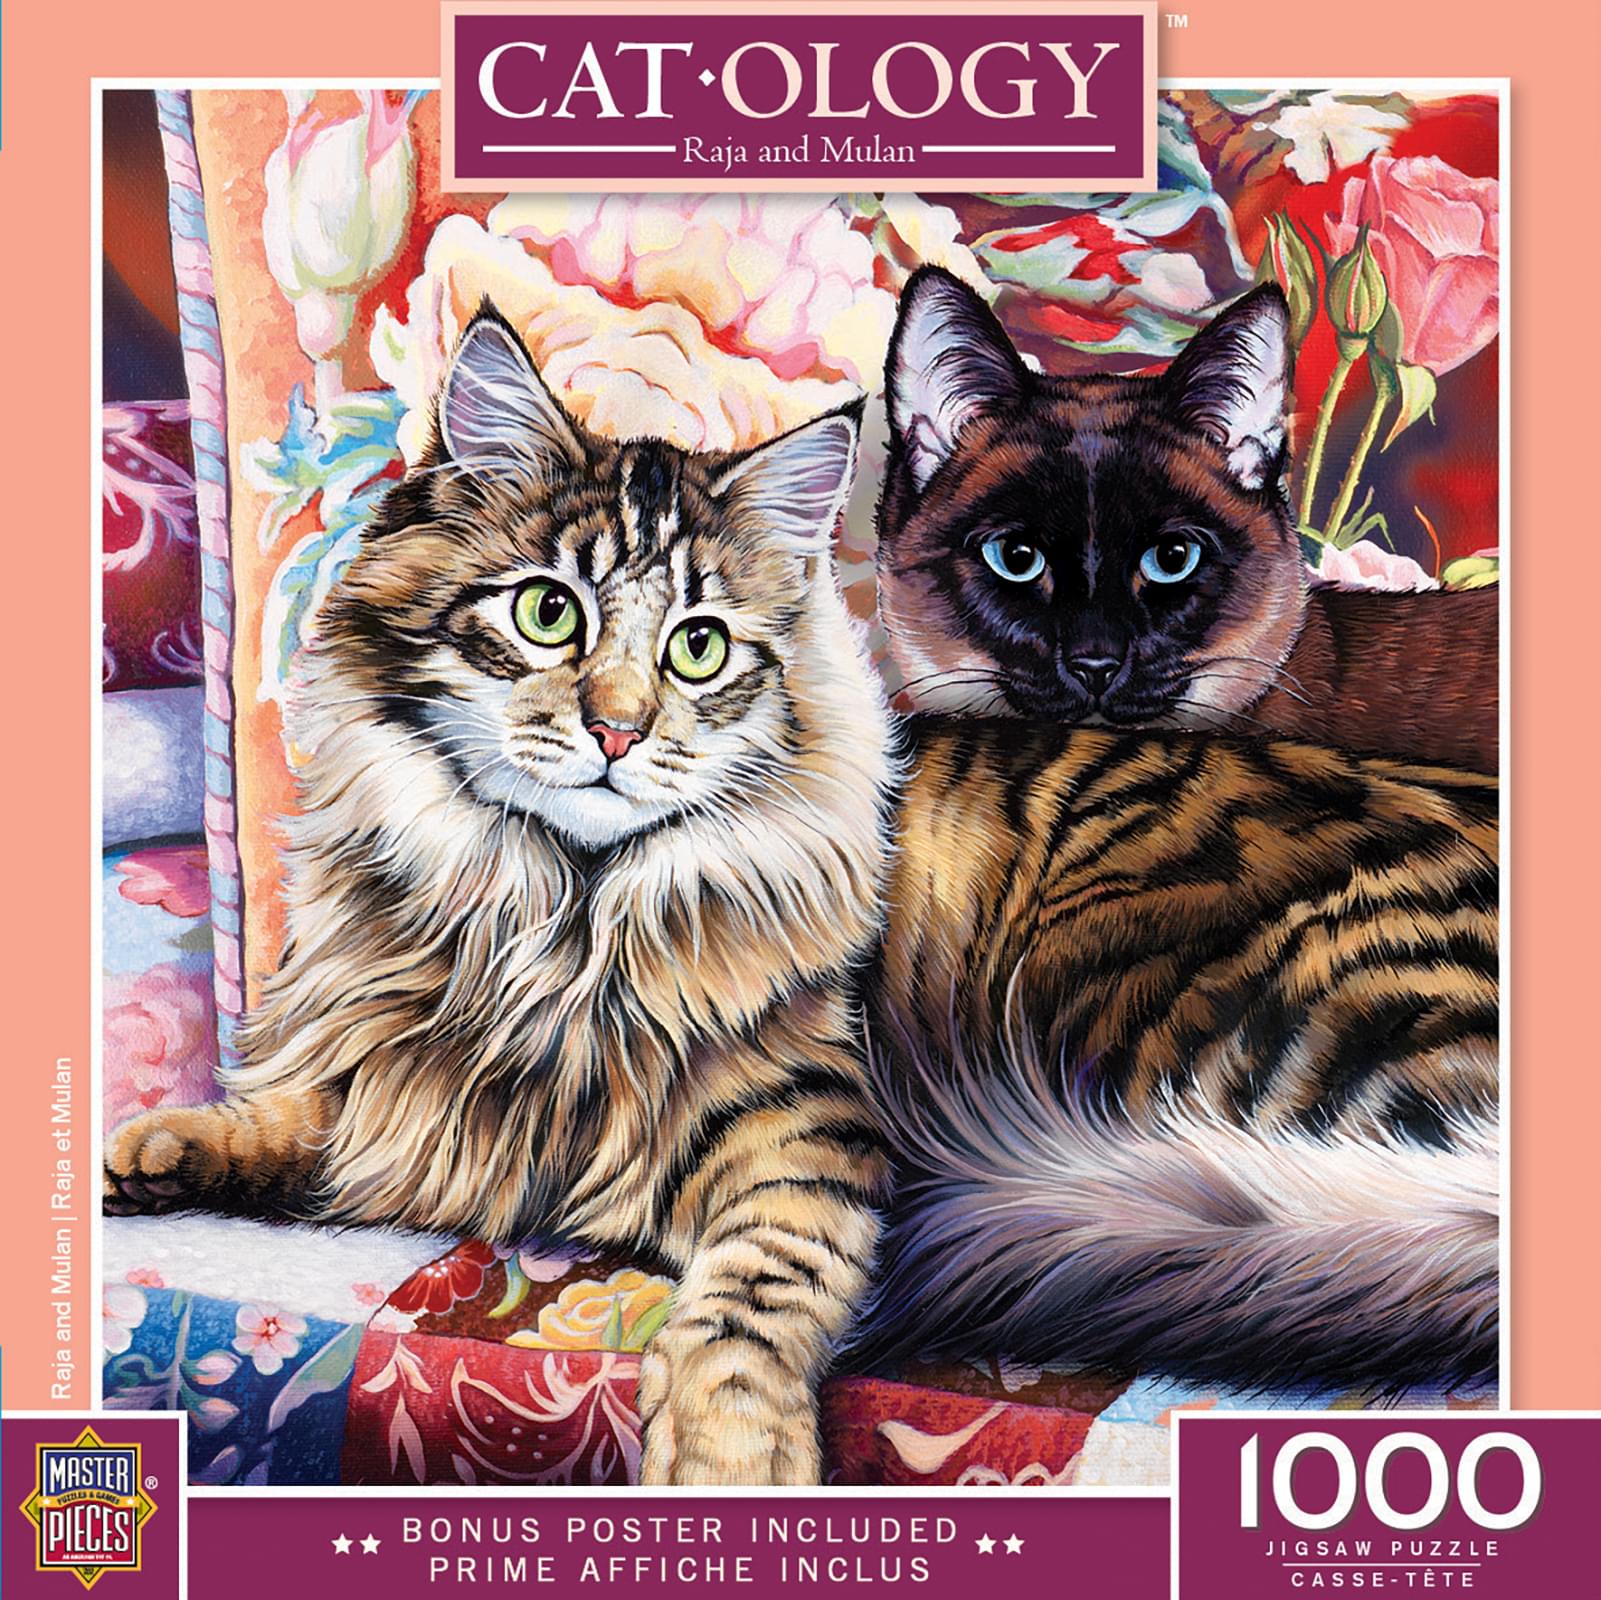 Cat-Ology Raja and Mulan 1000 Piece Jigsaw Puzzle